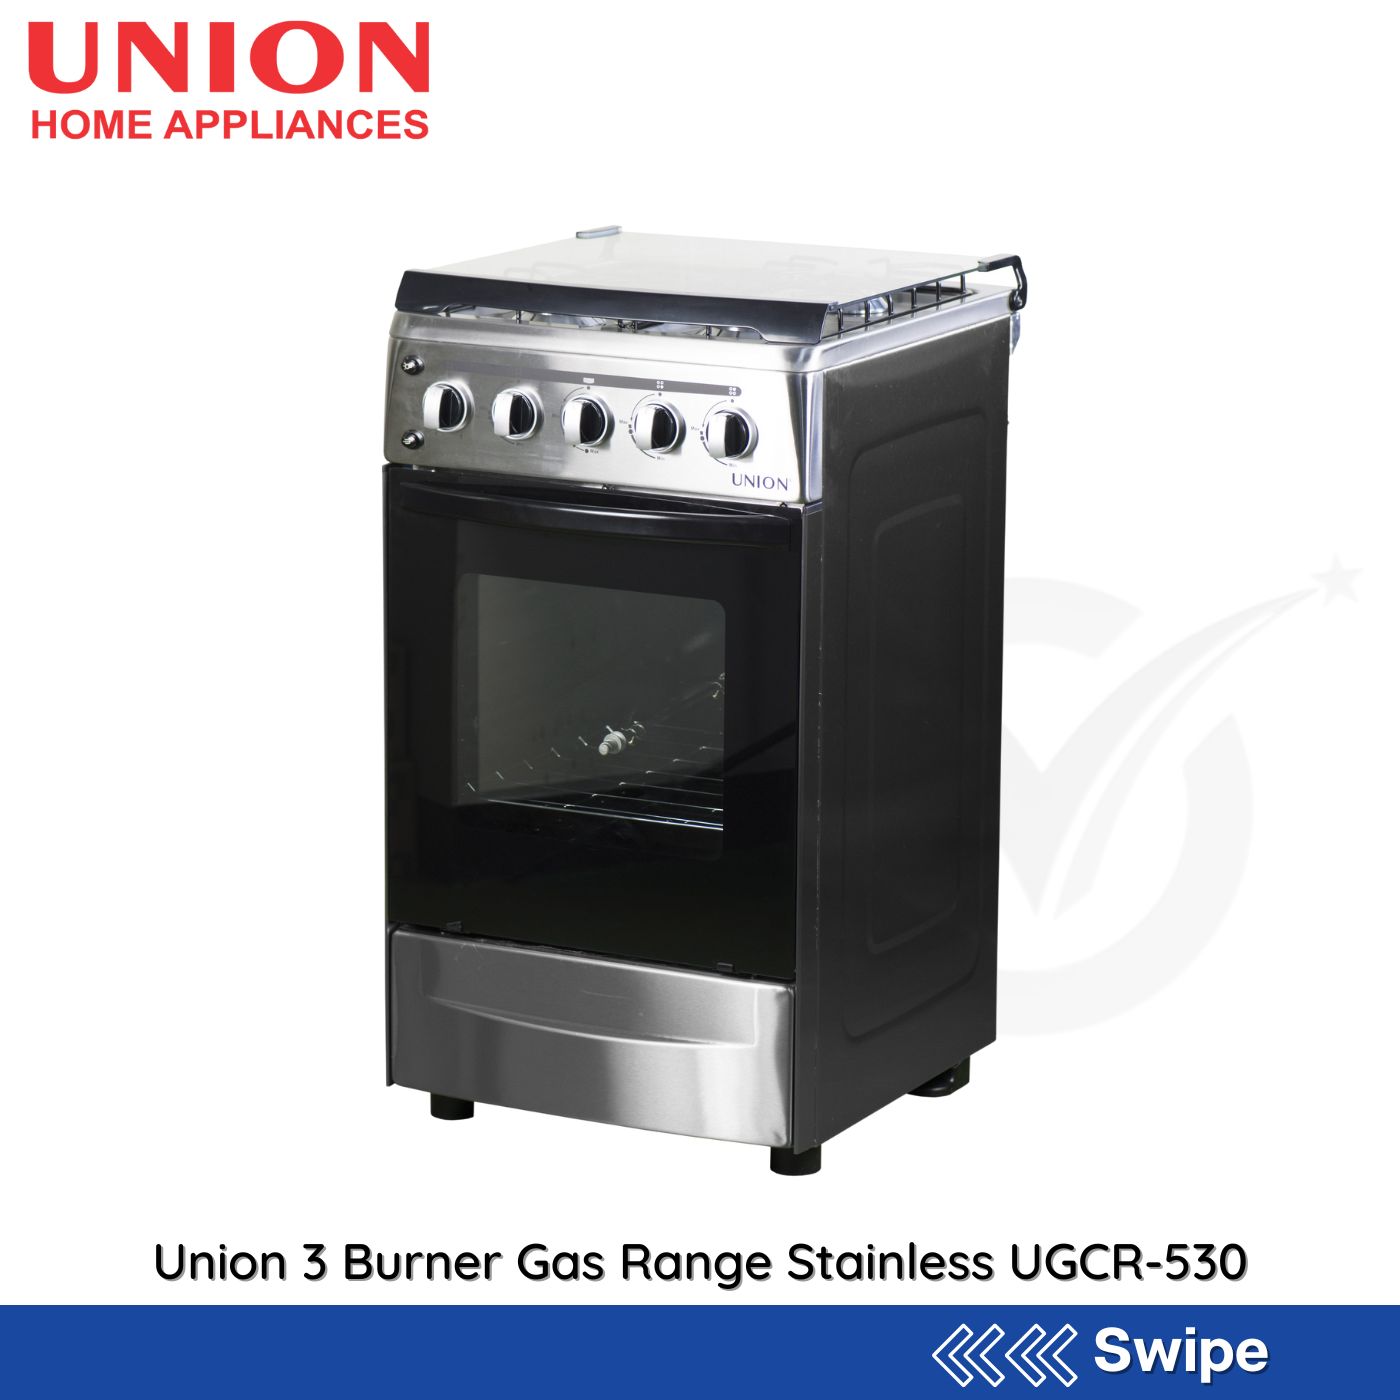 Union 3 Burner Gas Range Stainless UGCR-530